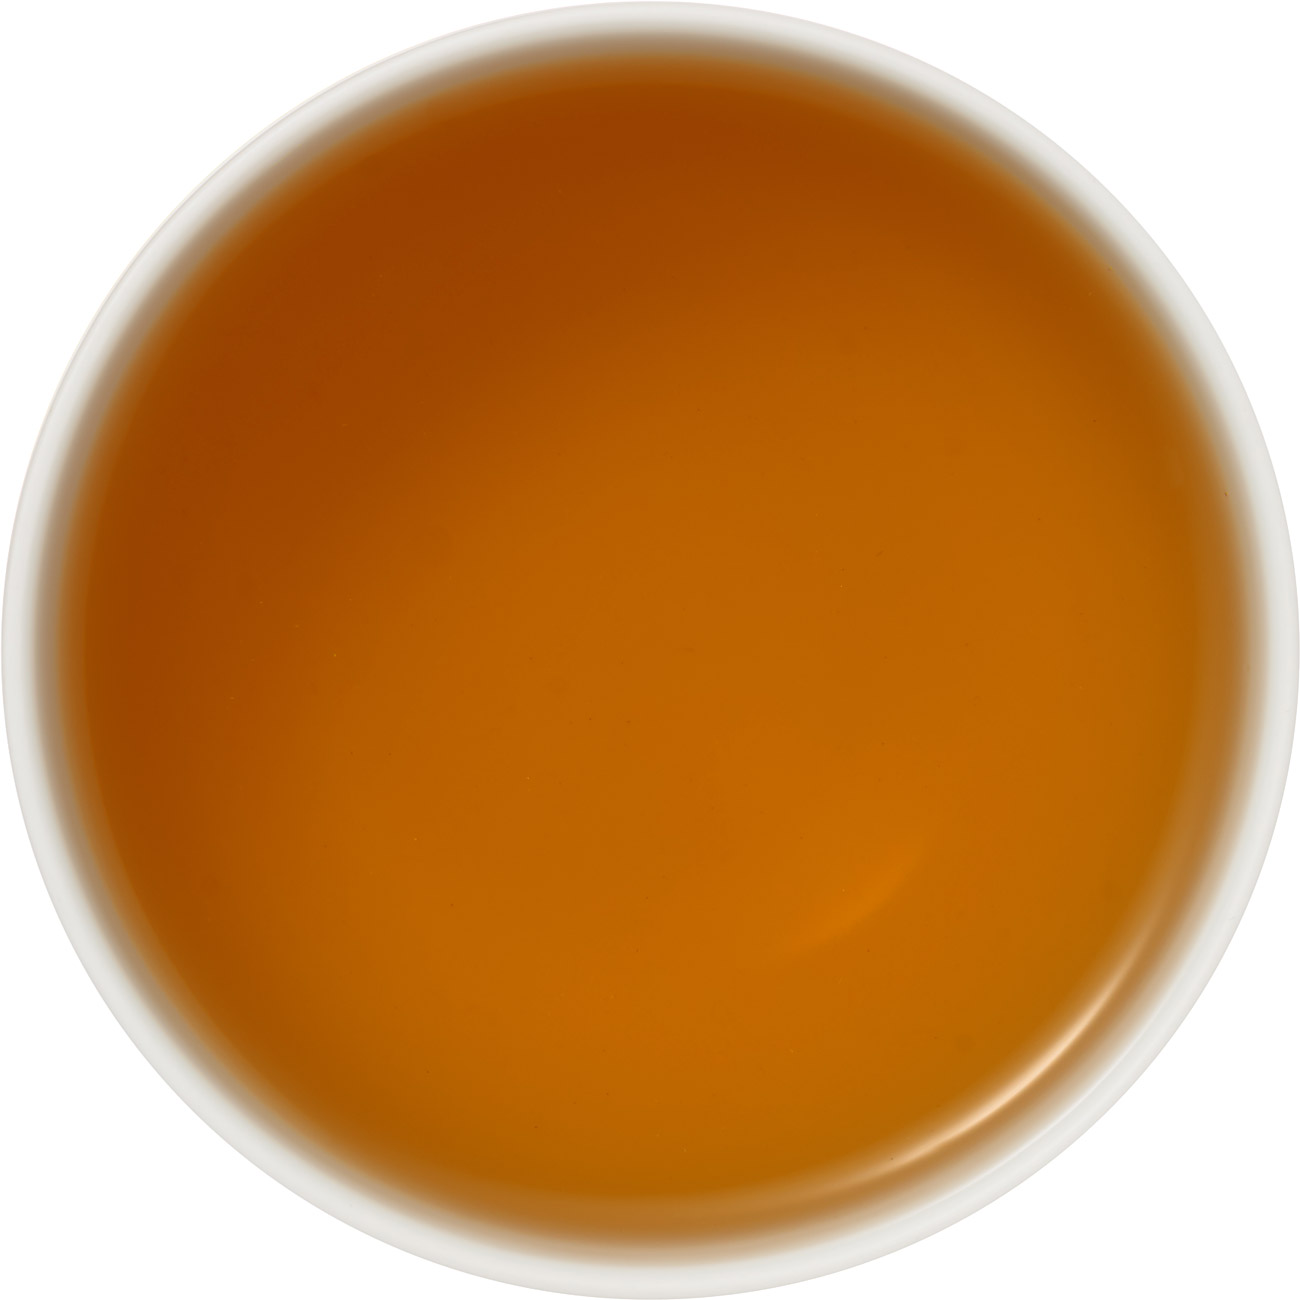 Earl Grey Darjeeling aromatisierter loser schwarzer Tee